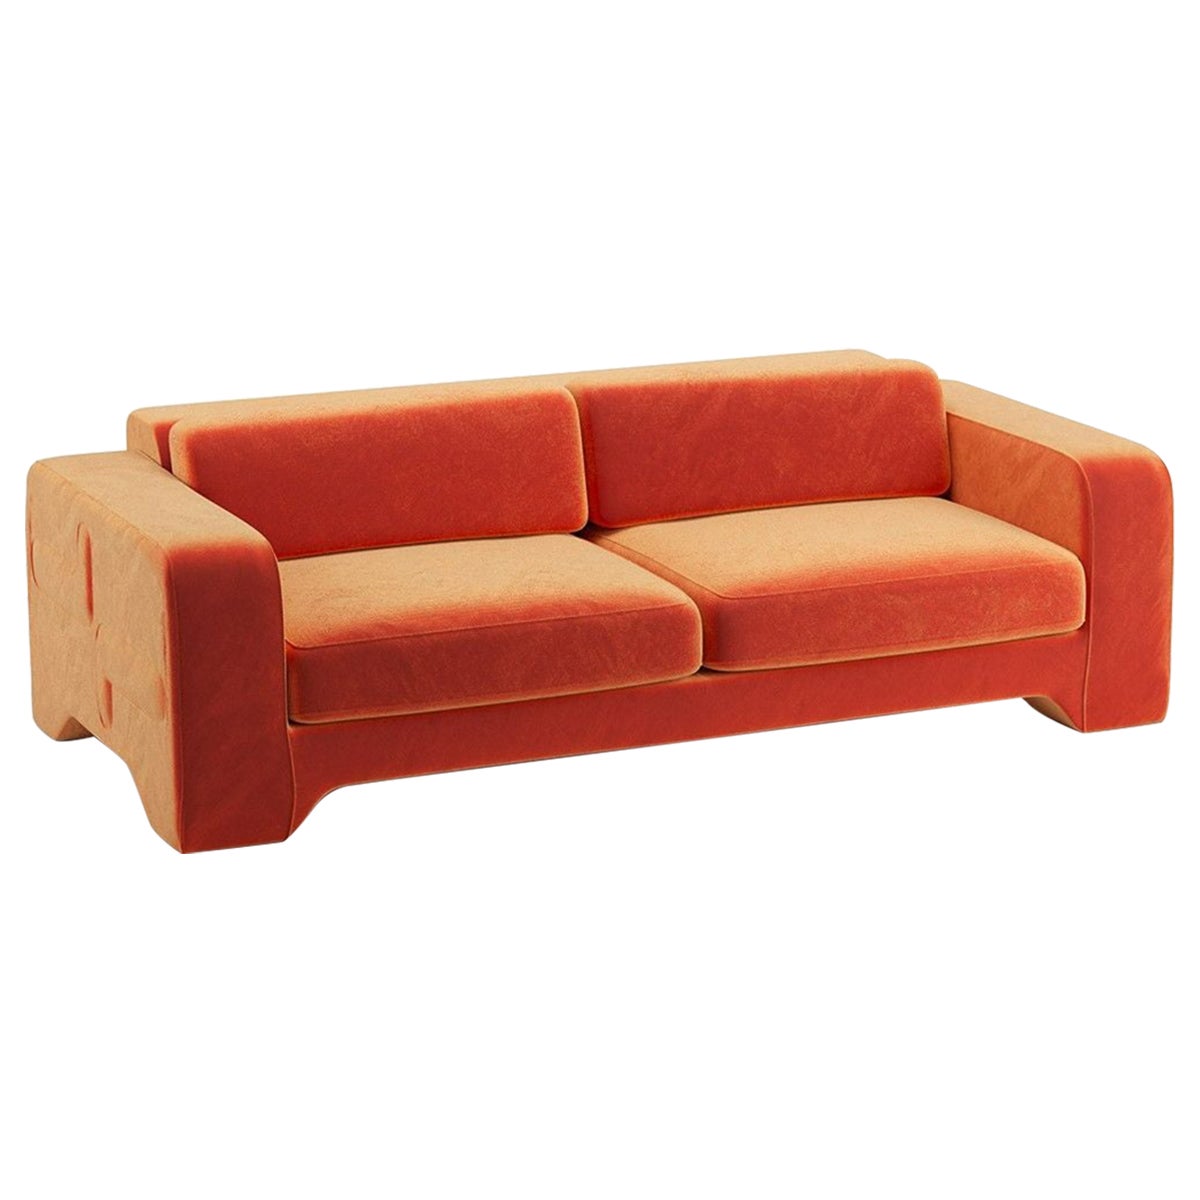 Popus Editions Giovanna 3 Seater Sofa in Orange Verone Velvet Upholstery For Sale